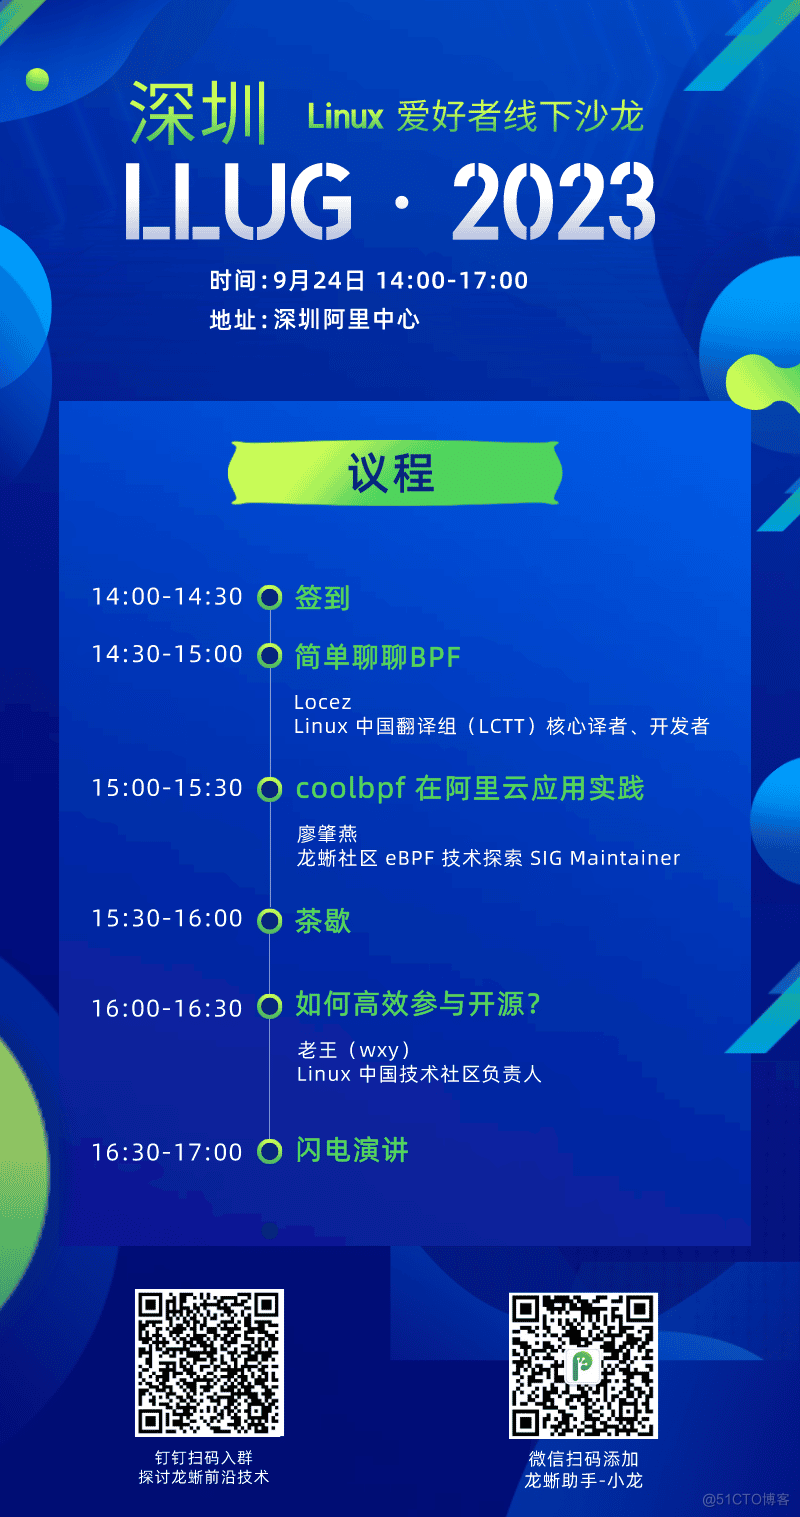 Linux 爱好者线下沙龙：LLUG 2023 深圳硬核来袭 | 第三站_龙蜥社区